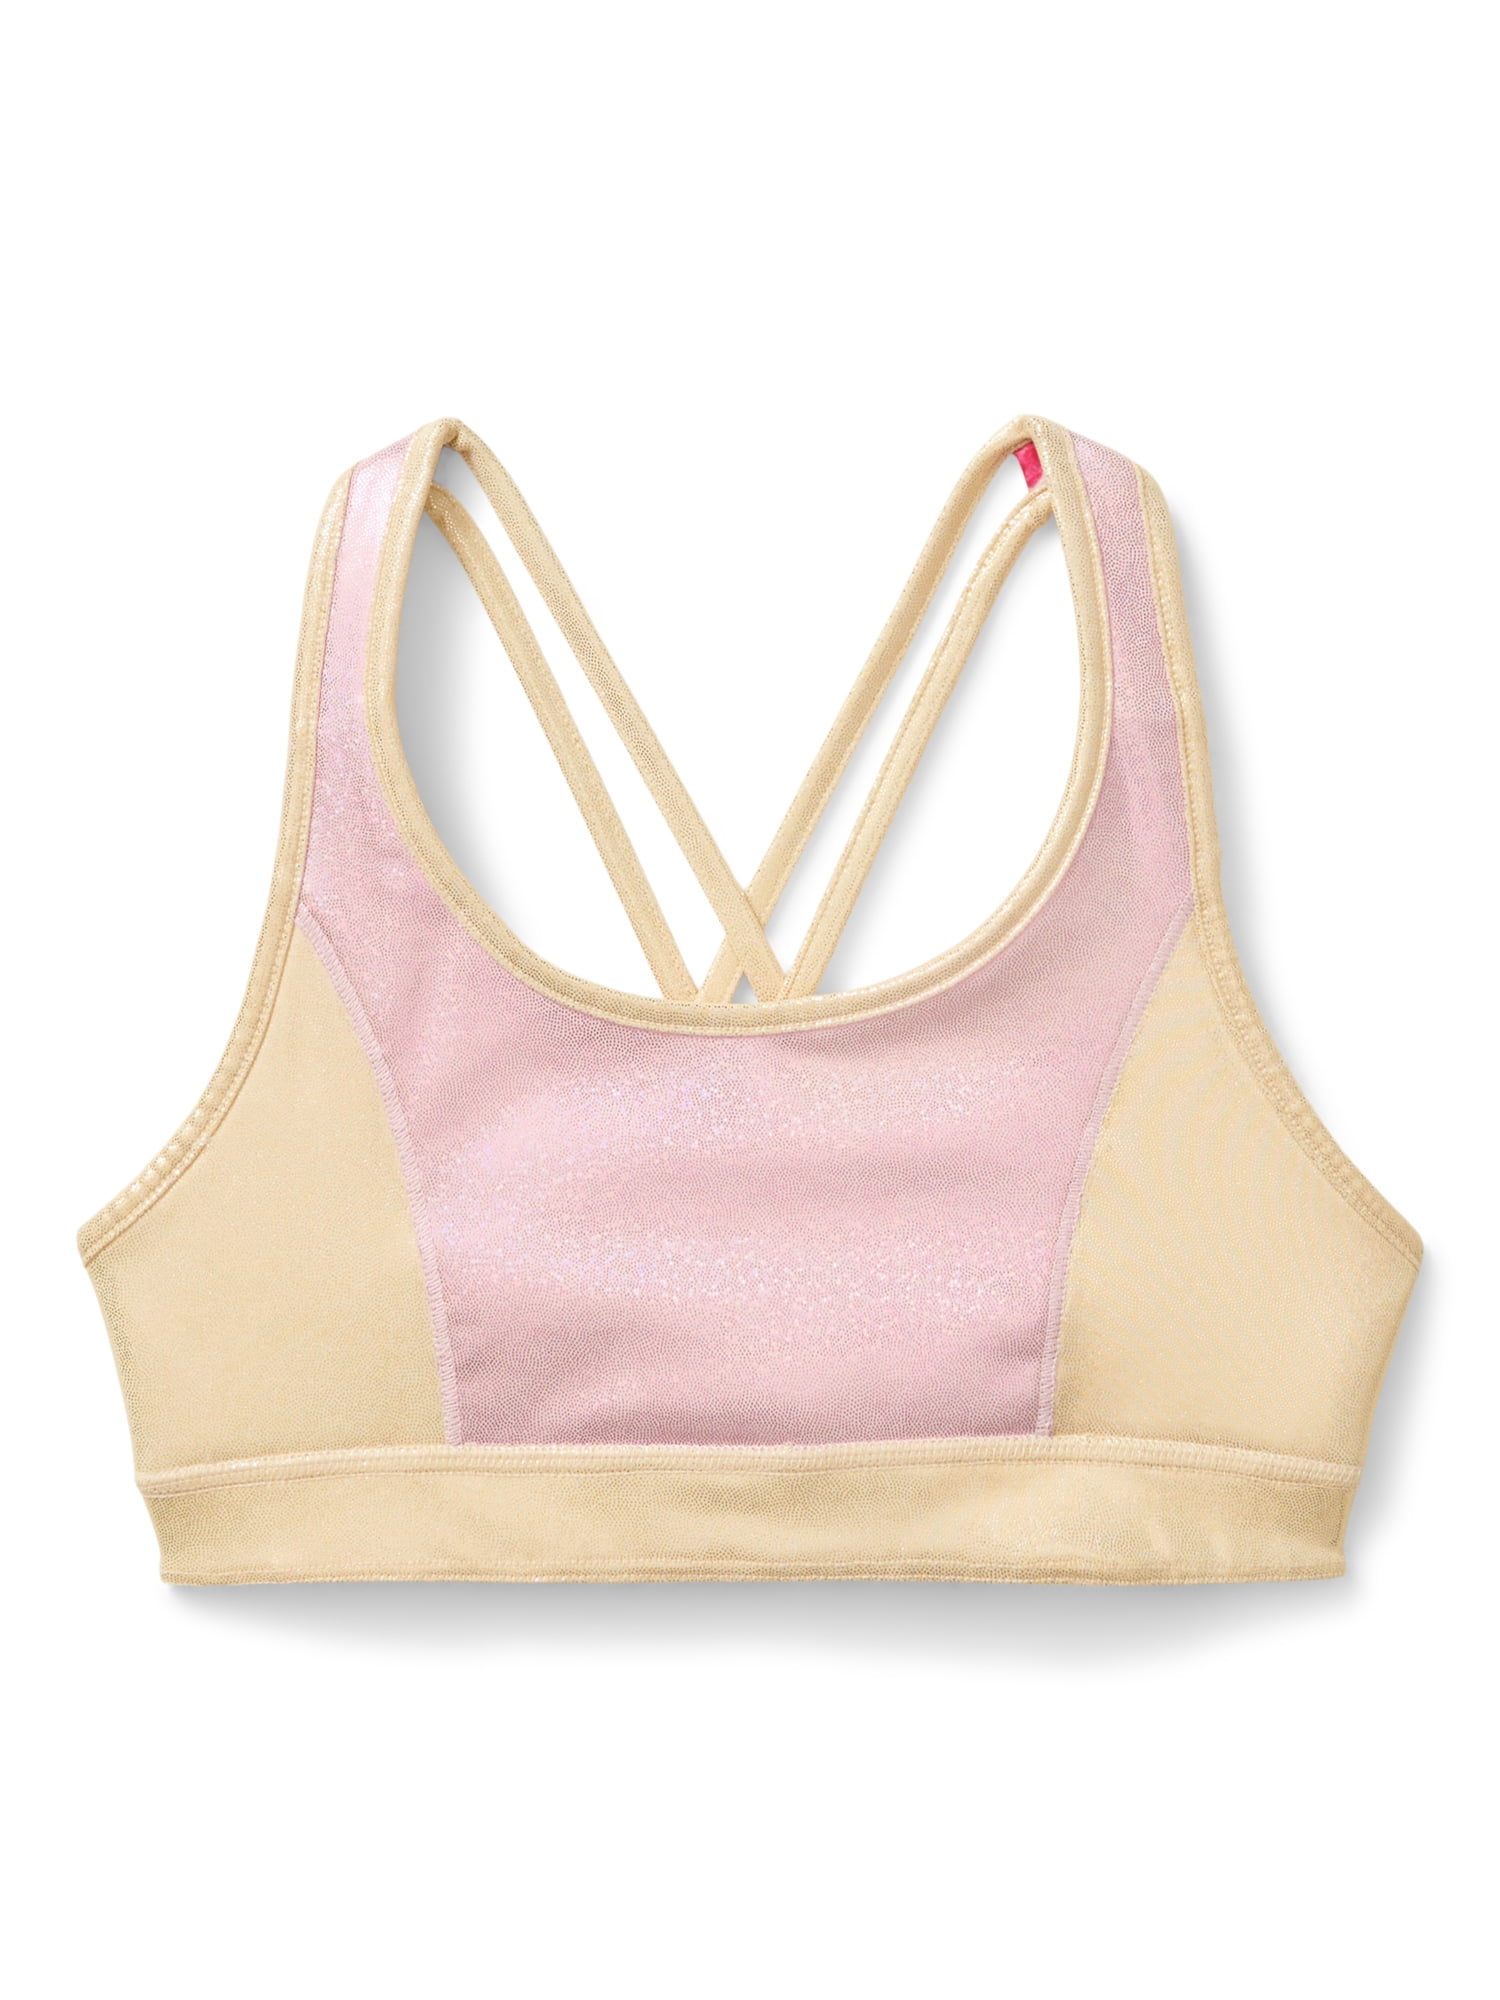 Girls justice sport bra size 26 new pink tye dye